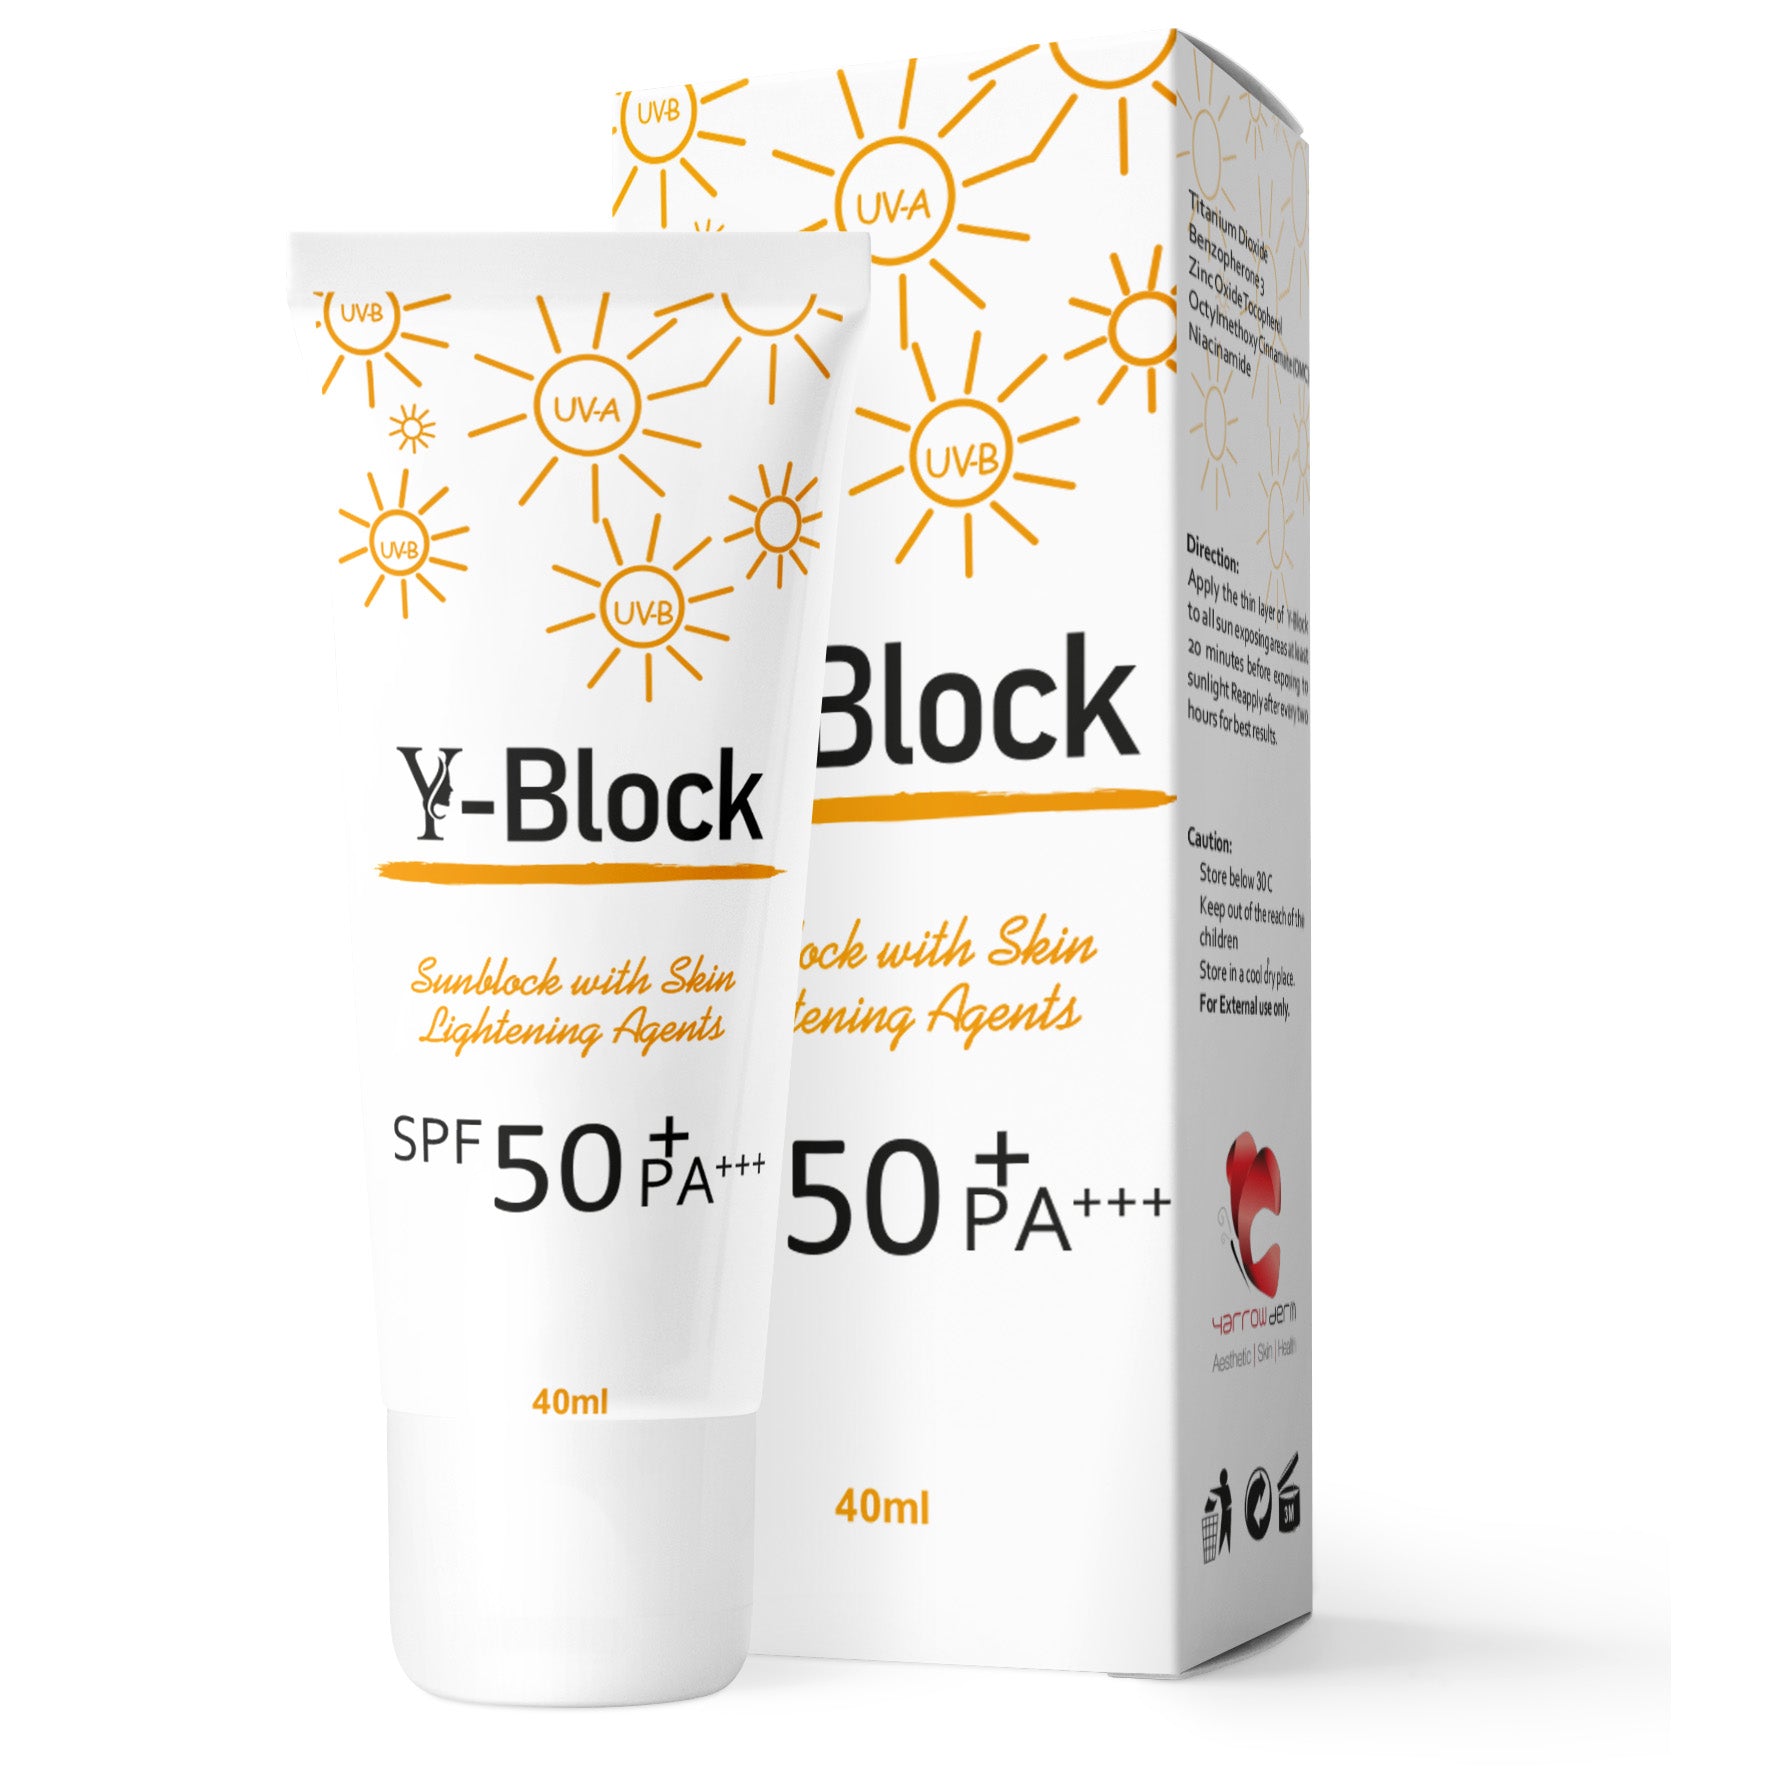 Y Block Sunblock with Skin lightening Agents SPF 50+